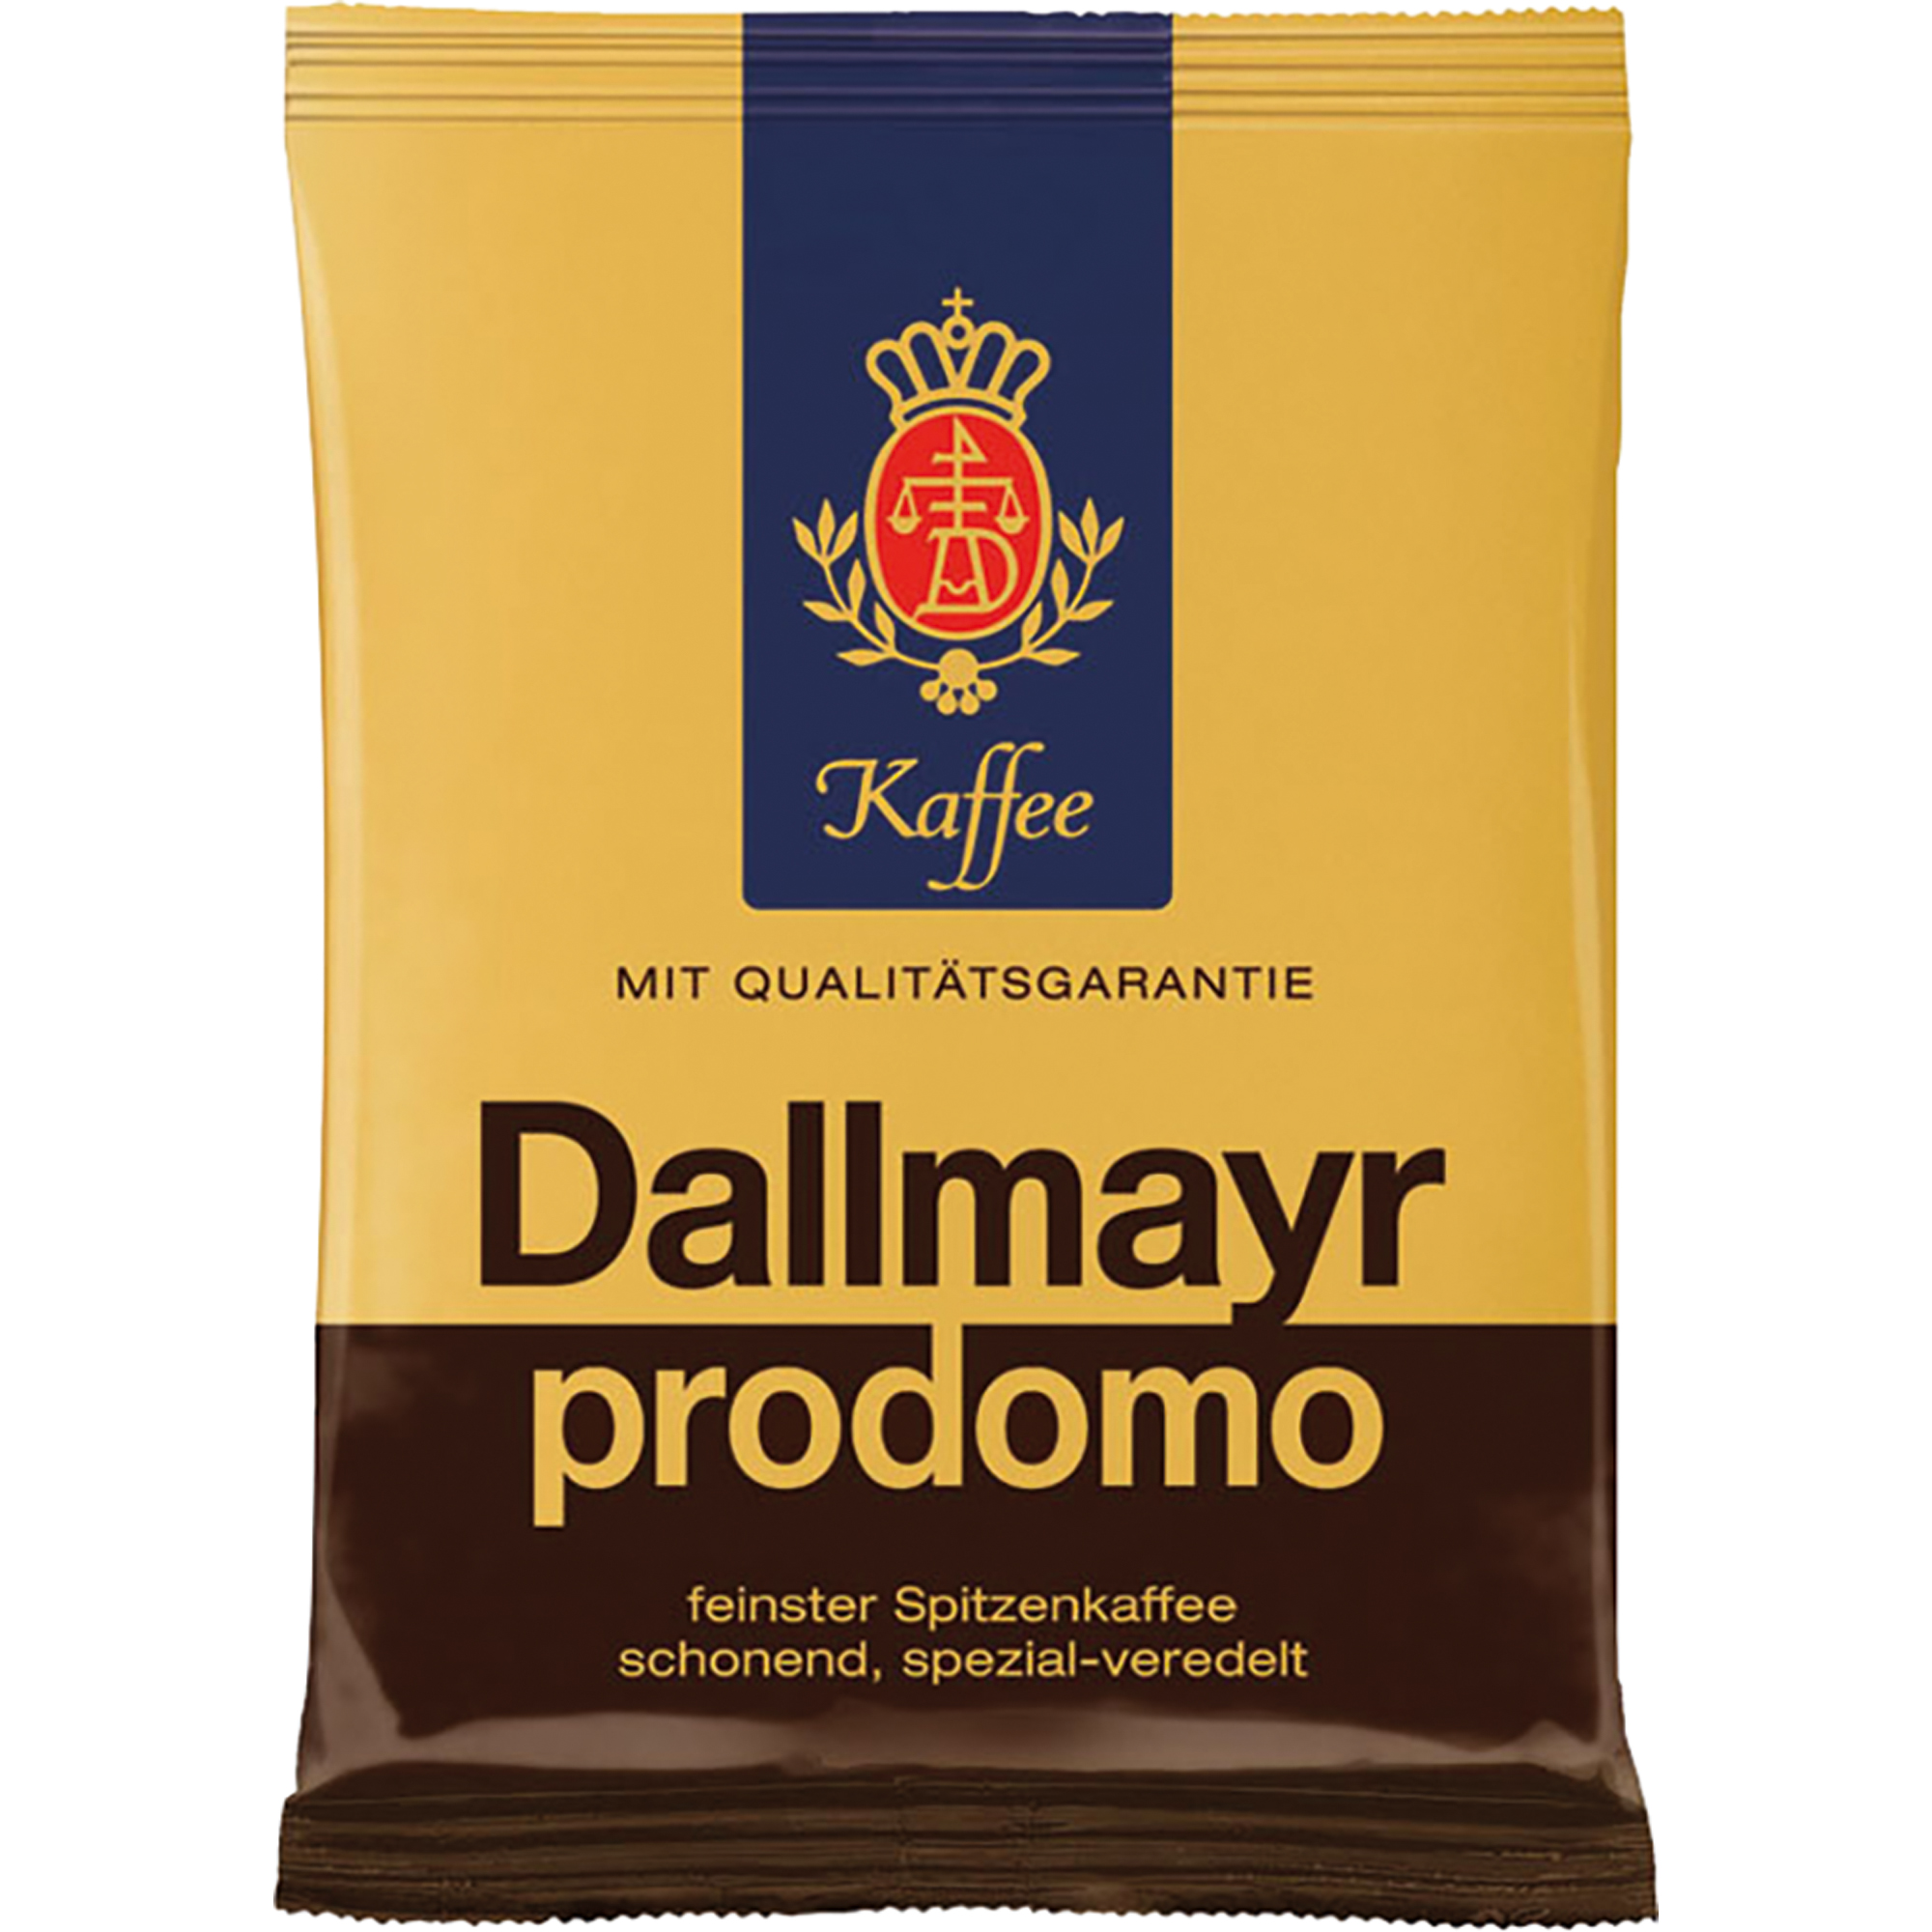 Dallmayr Kaffee prodomo 50 x 60 g/Pack.